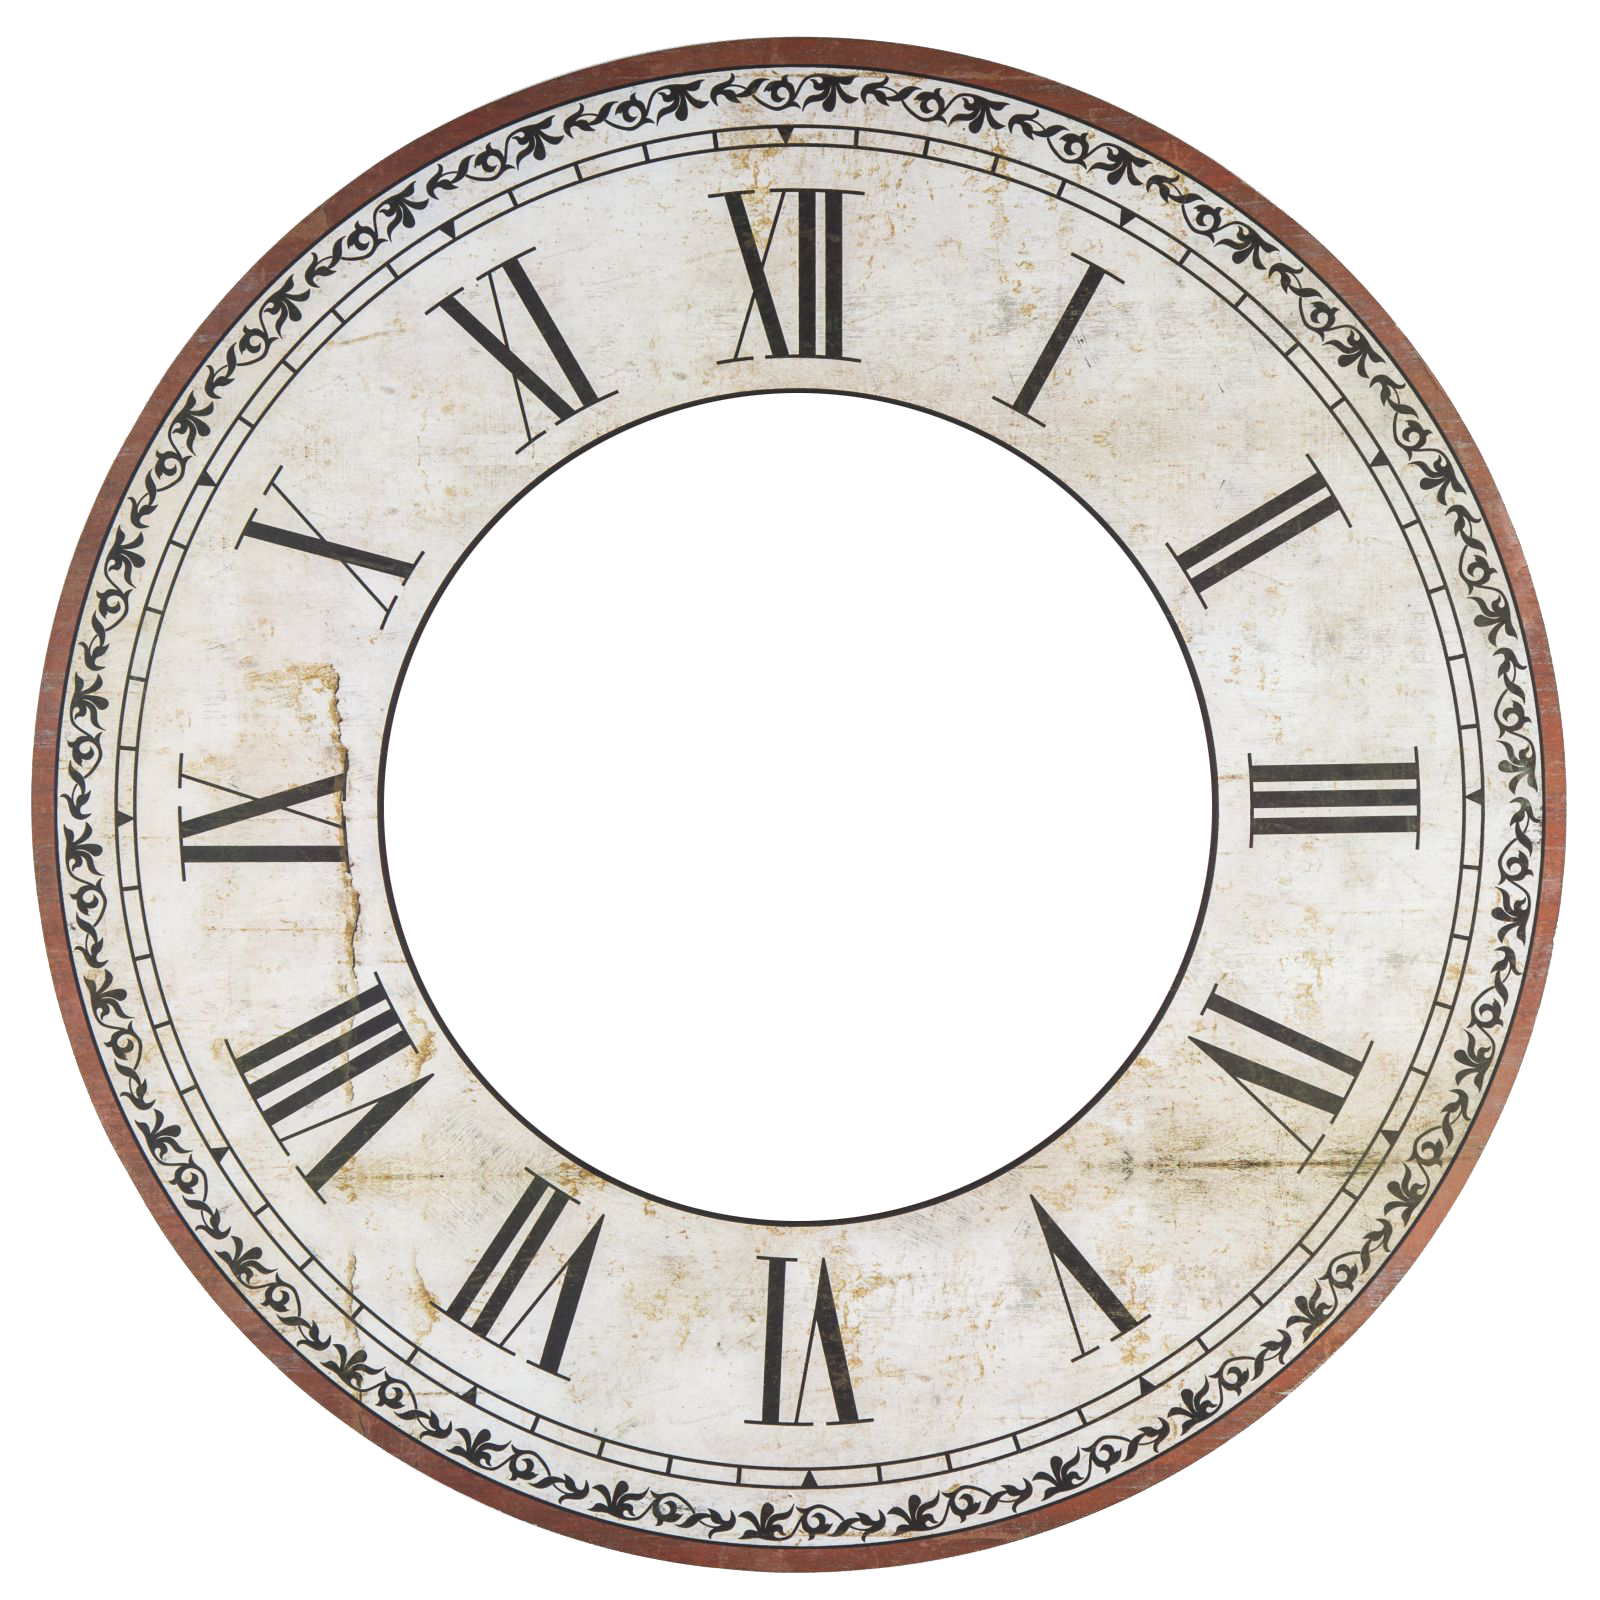 Steampunk clipart gold clock, Steampunk gold clock Transparent FREE for ...